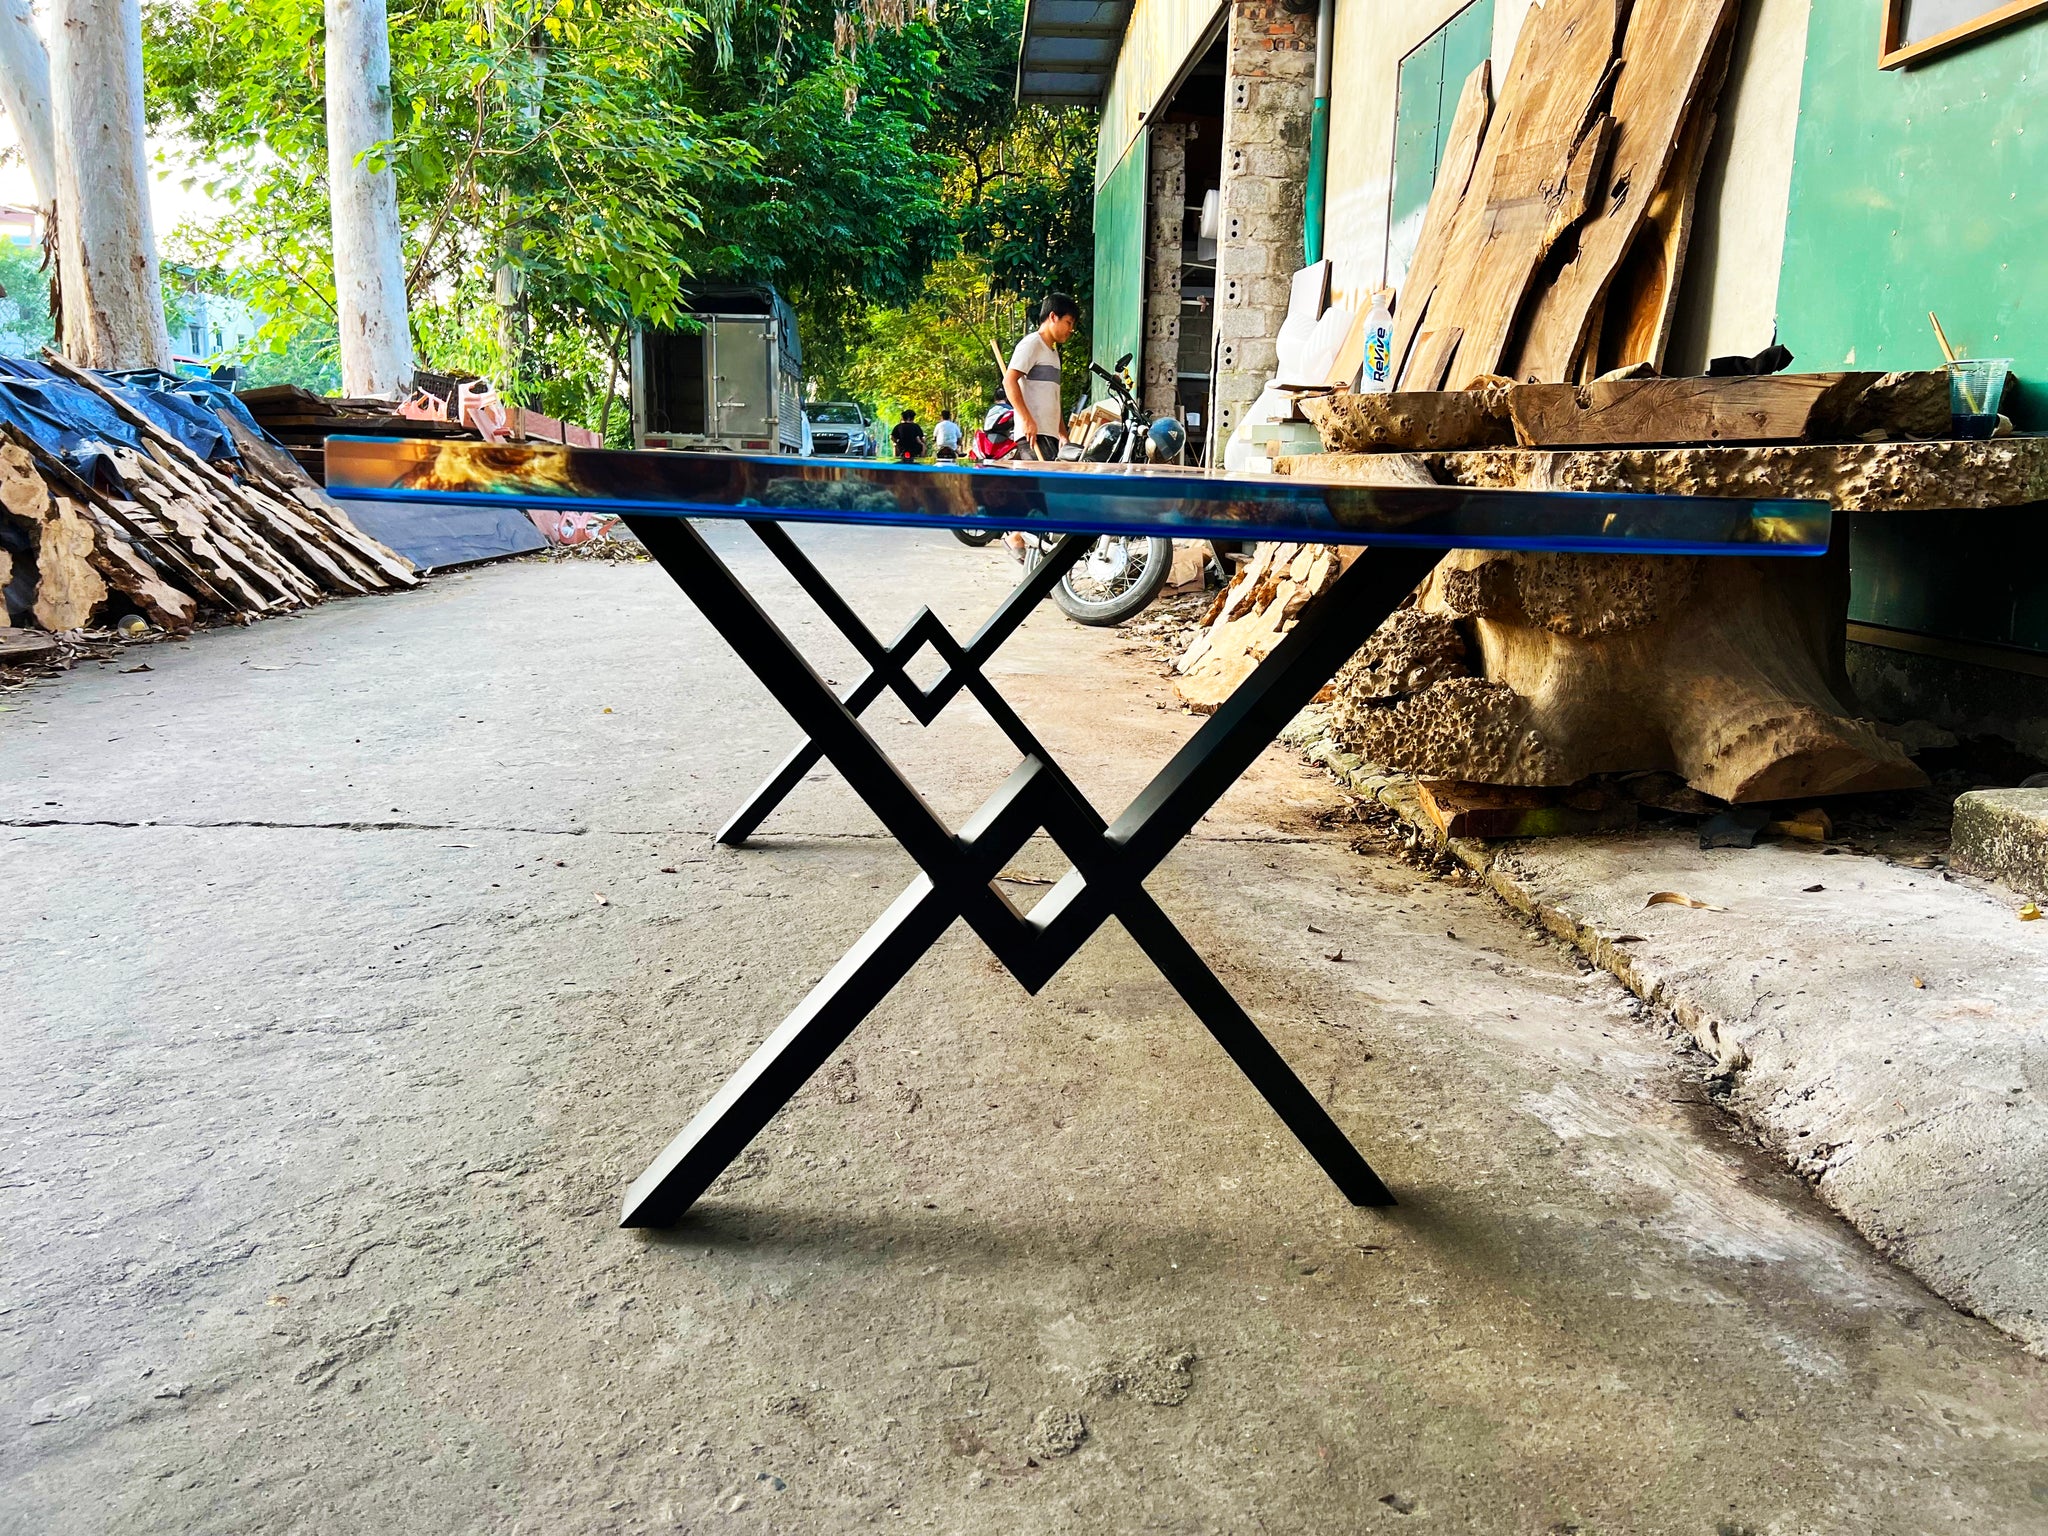 Custom Epoxy Resin Table with Ocean Wave, Ocean Design, Wood Art Resin, Coffee Table, Resin Art, Epoxy Table, Resin Table